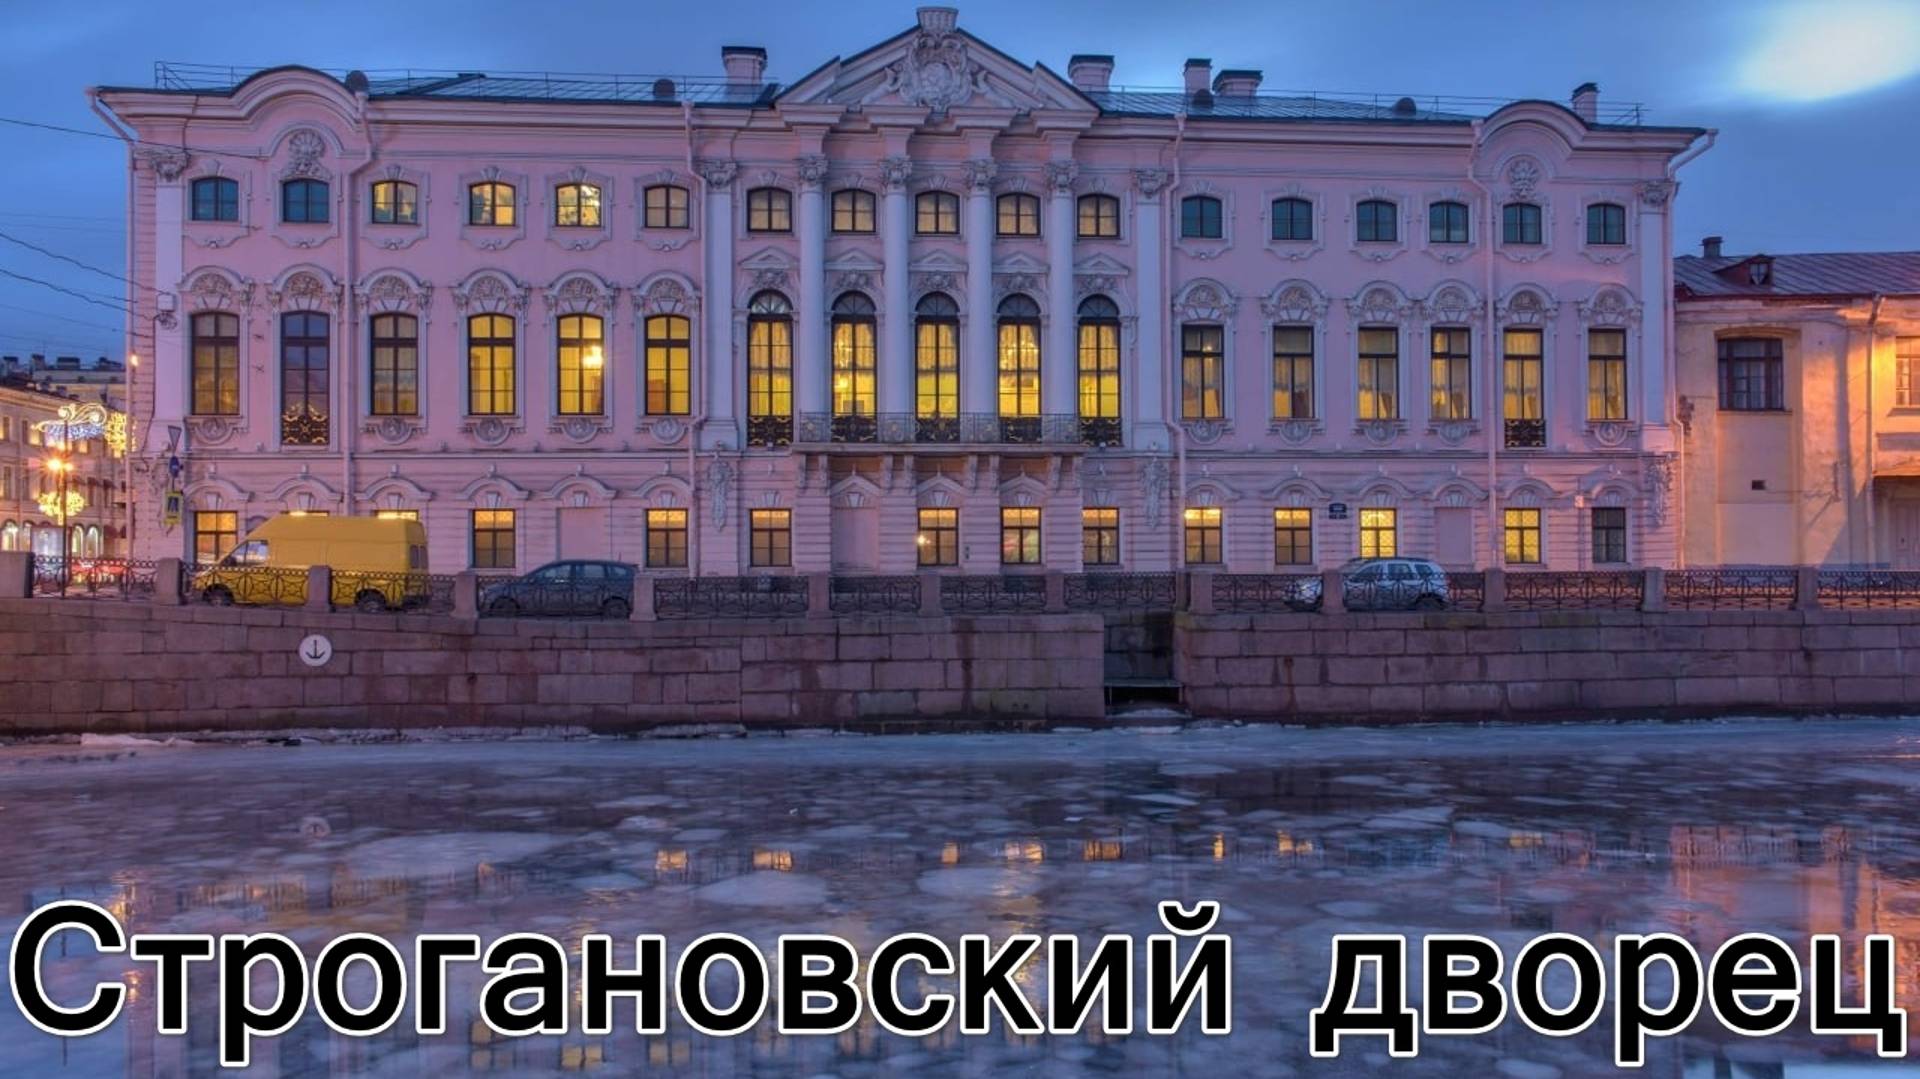 Строгановский дворец  часть 1